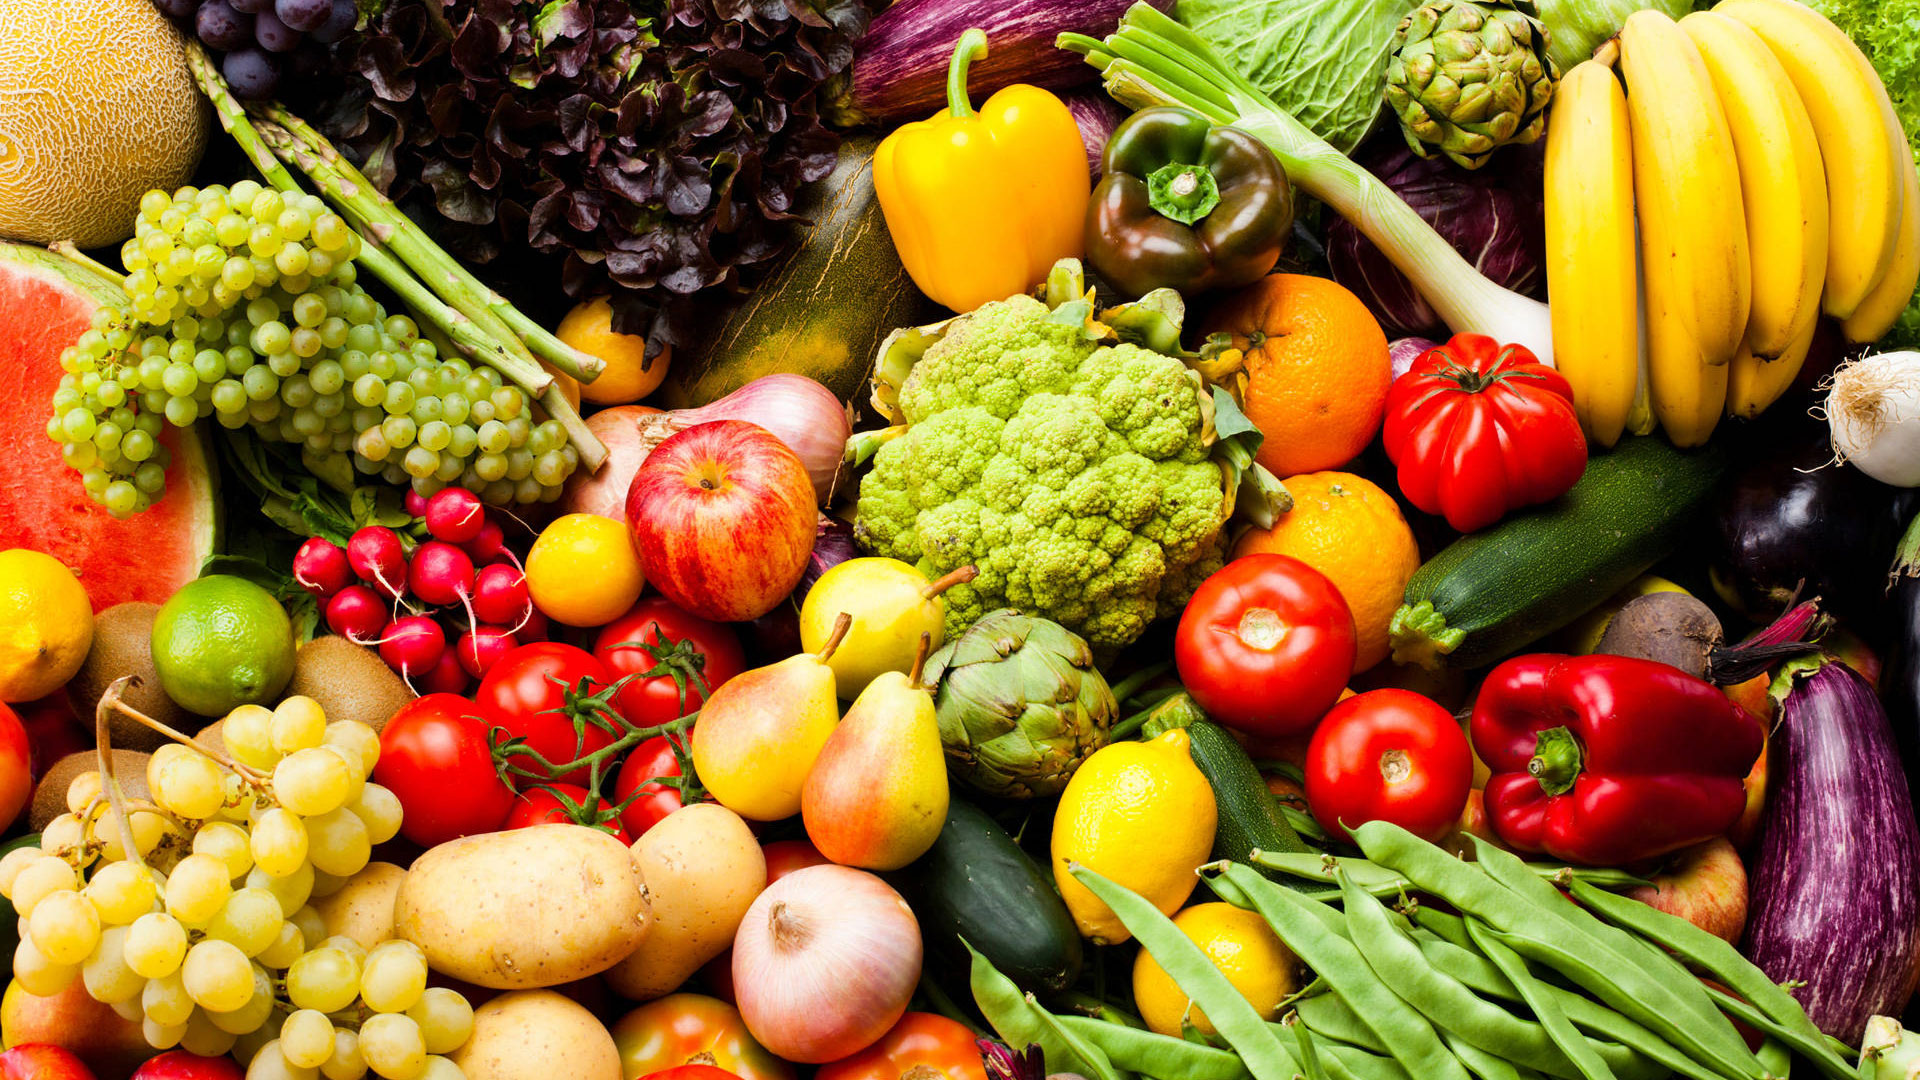 Garden Fresh Vegetables – The Market Place